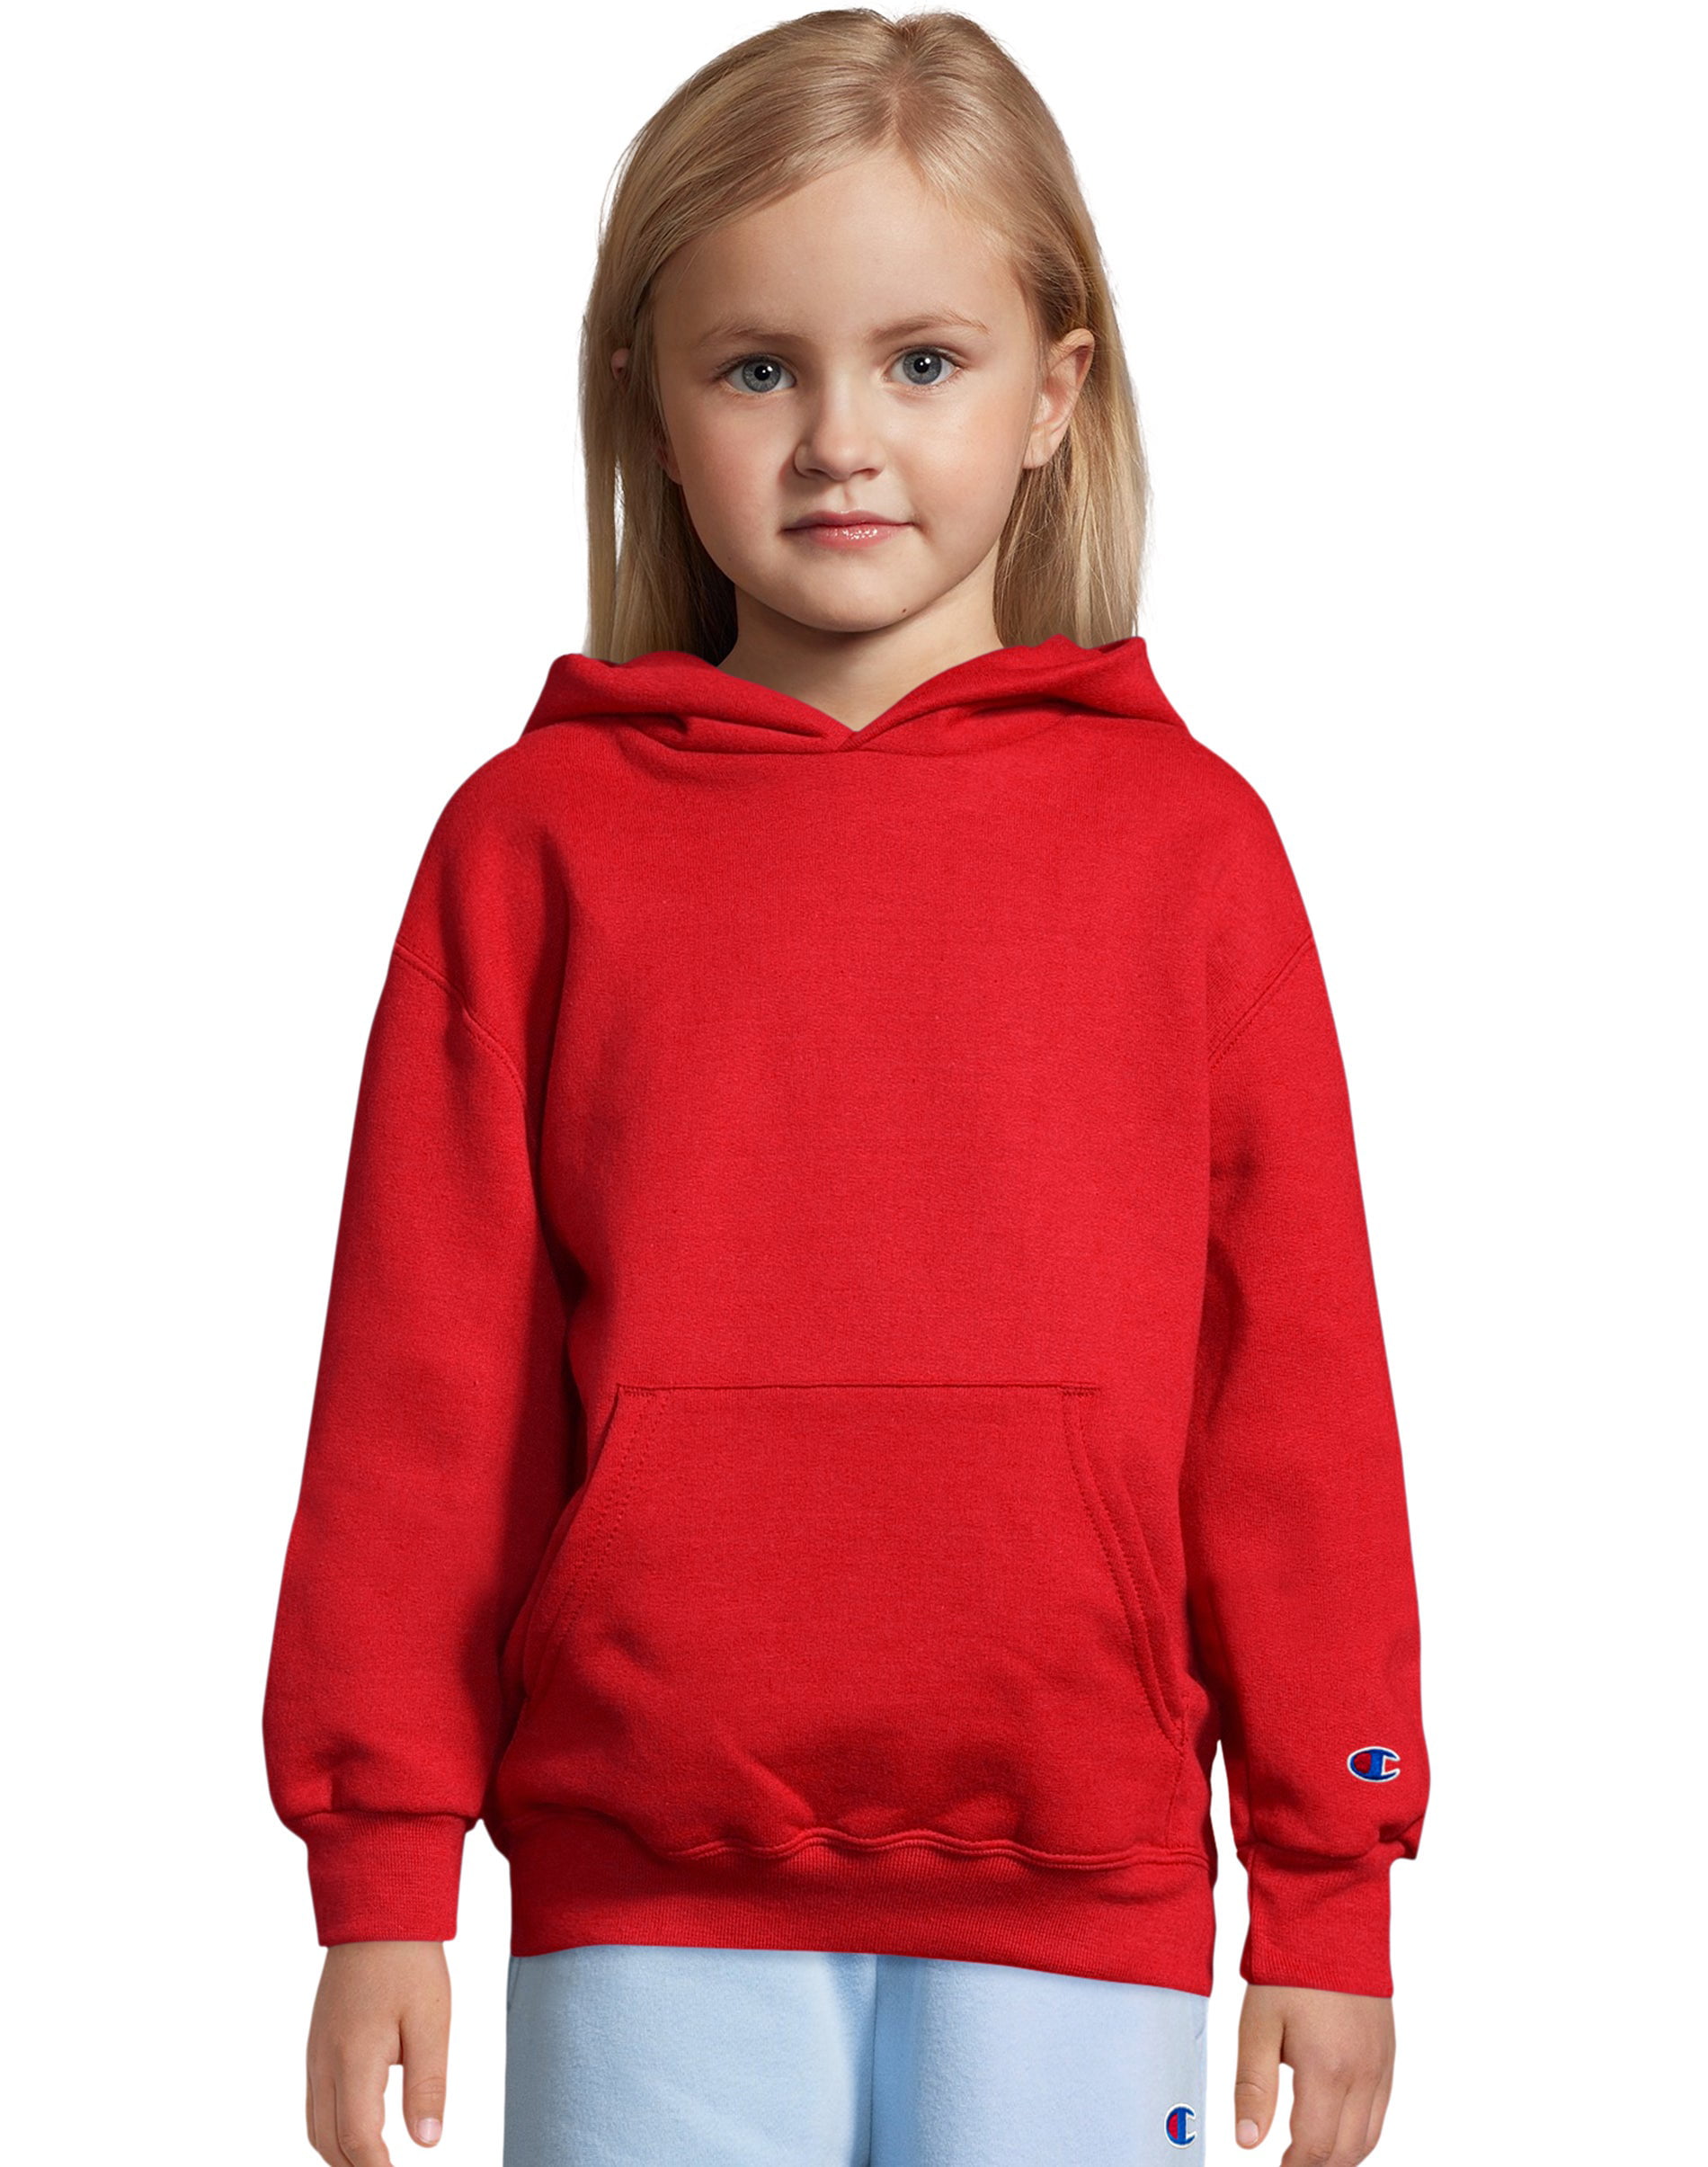 Fleece Pull Over Sweatshirt for Boys Girls Kids Youth Pig Unisex Toddler Hoodies